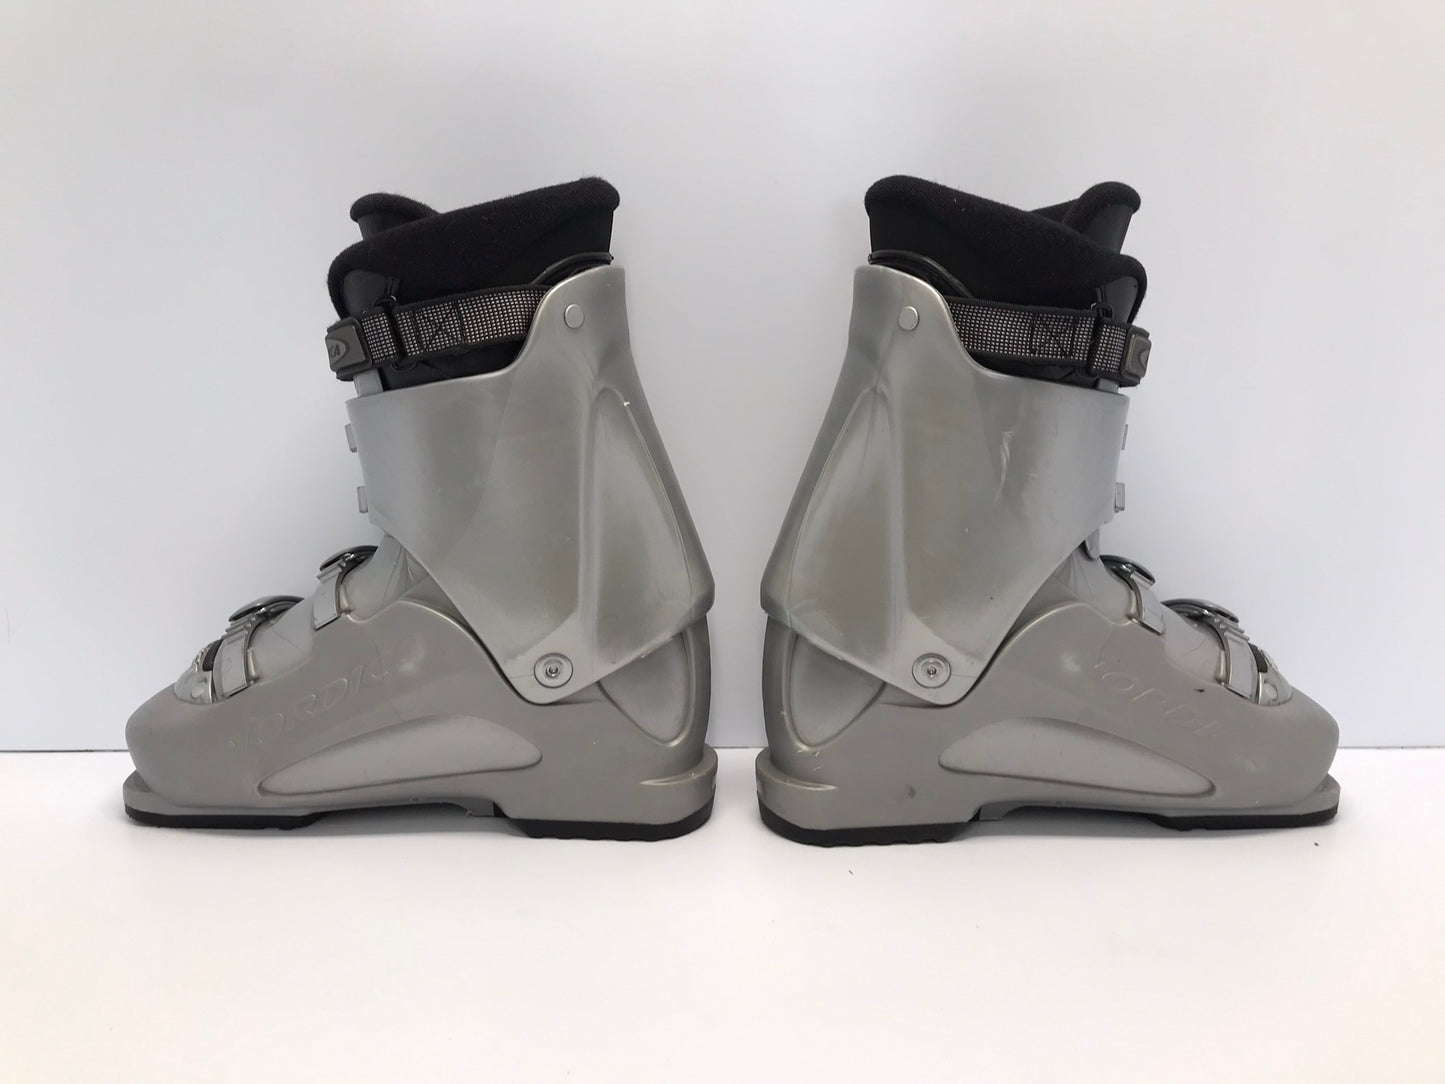 Ski Boots Mondo Size 26.5 Men's Size 7.5 Ladies Size 8.5 300 mm Nordica Grey Black New